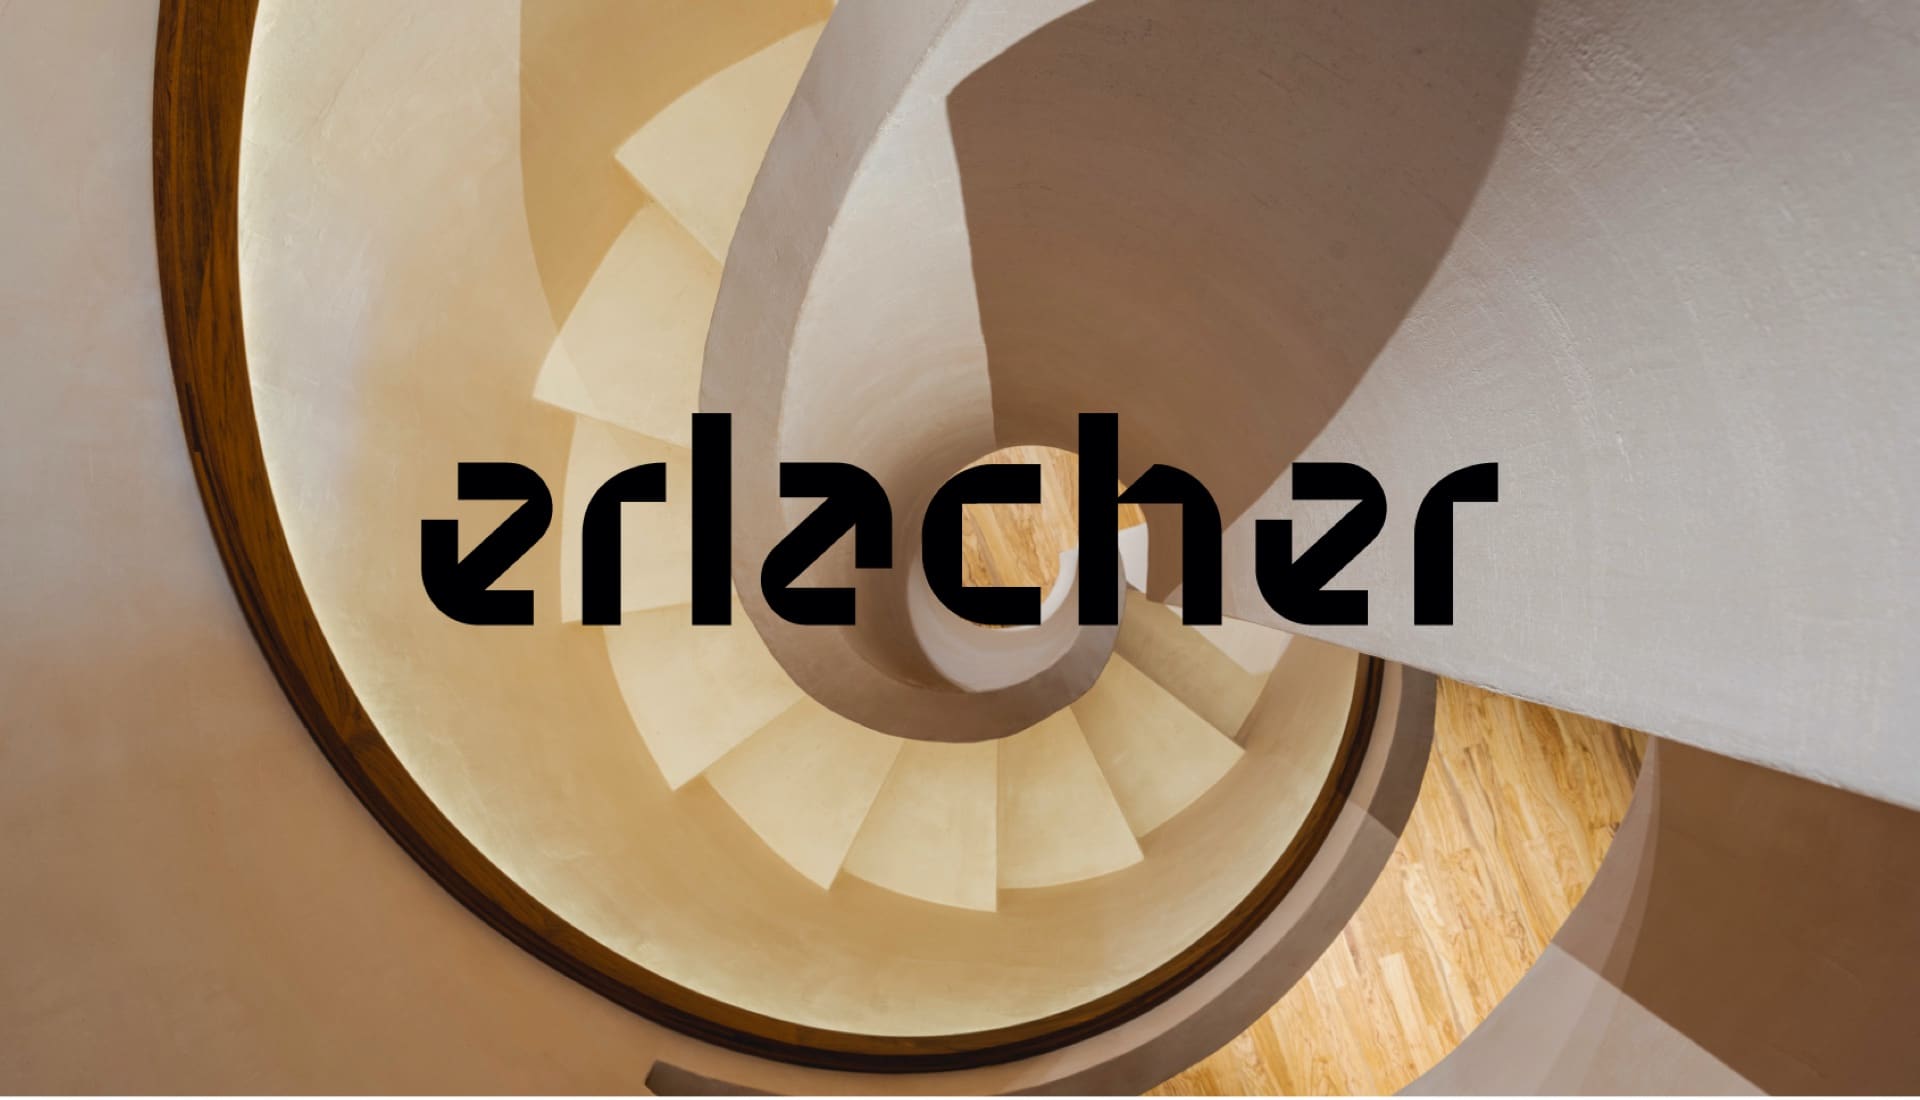 Erlacher - Strategy development, corporate Identity, print design